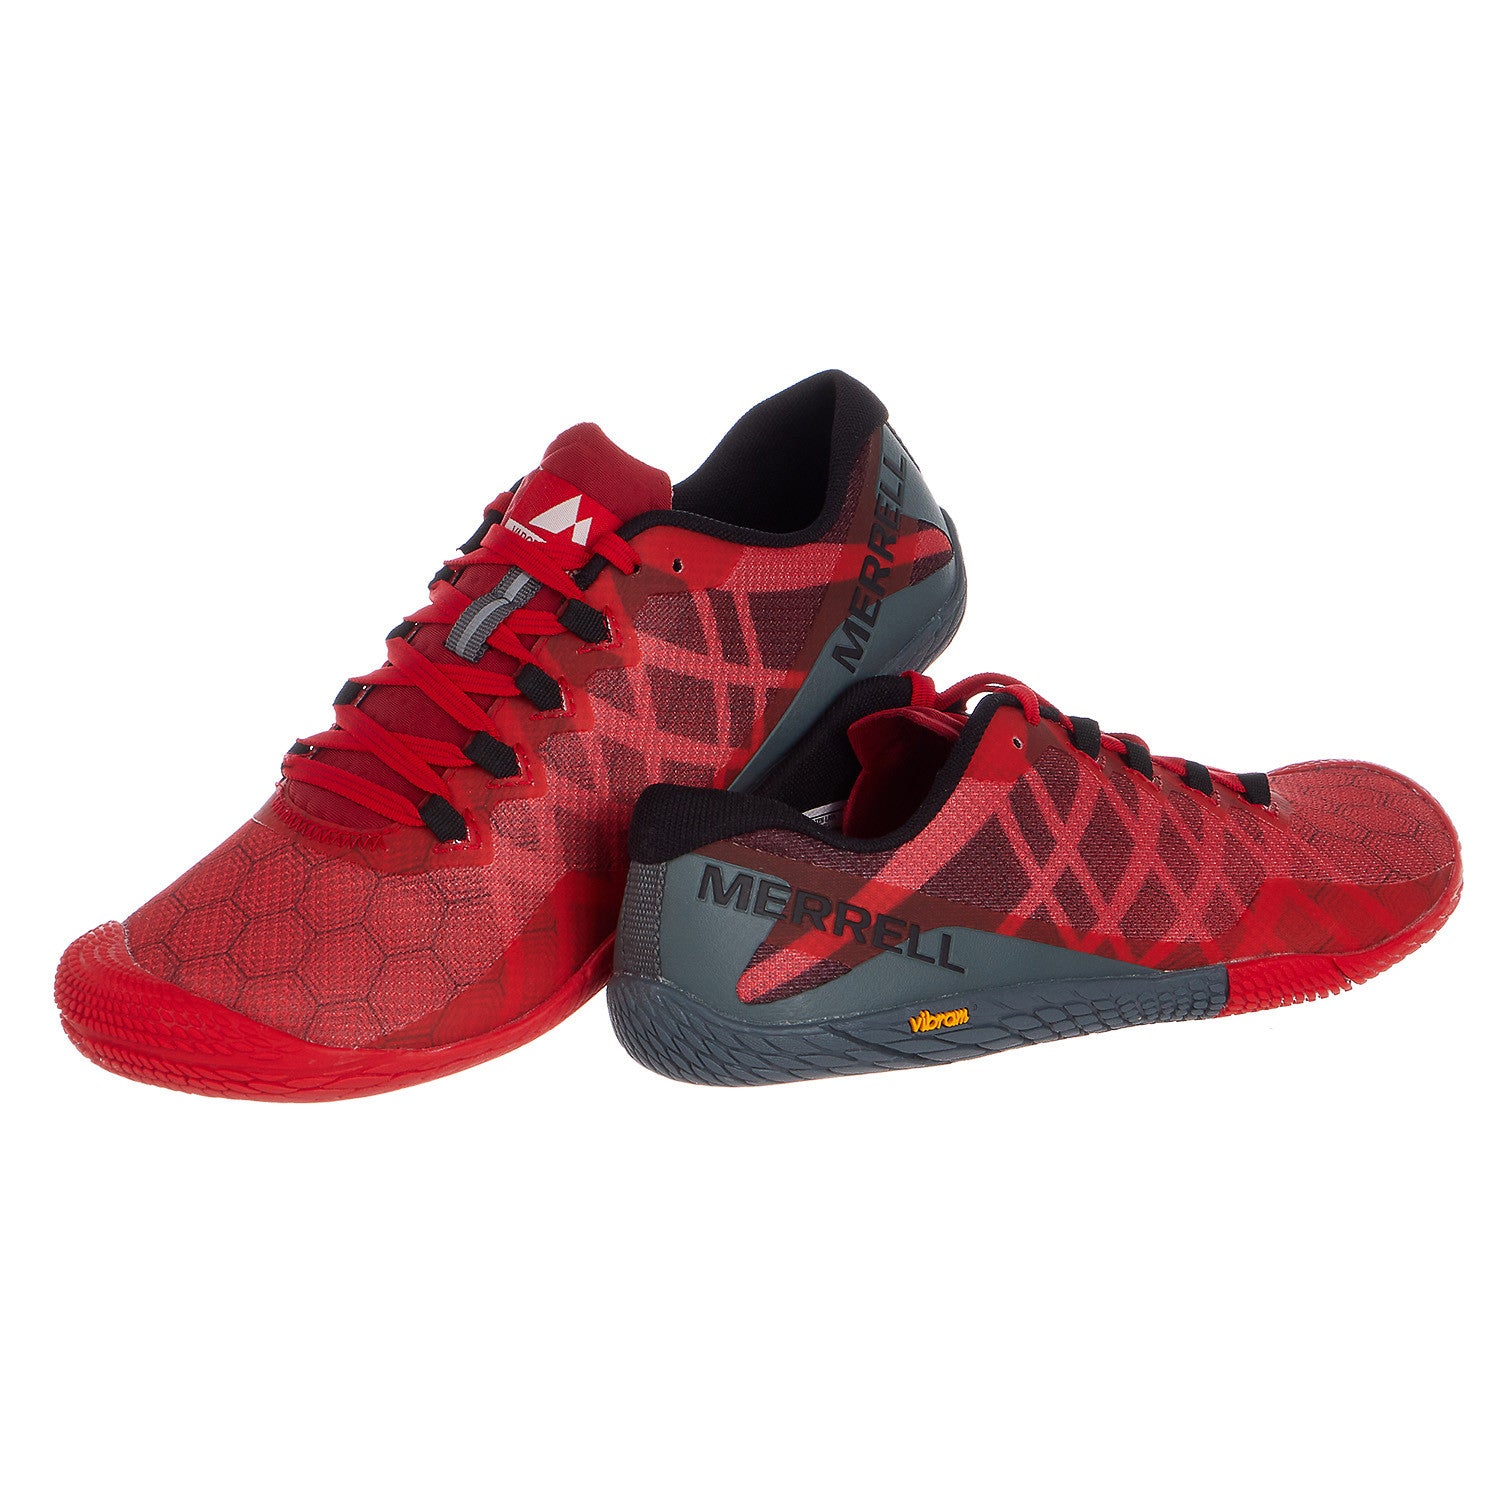 Merrell Barefoot Trail Glove Shoes Mens size 7 Black/Molton Lava Red Gray  Vibram